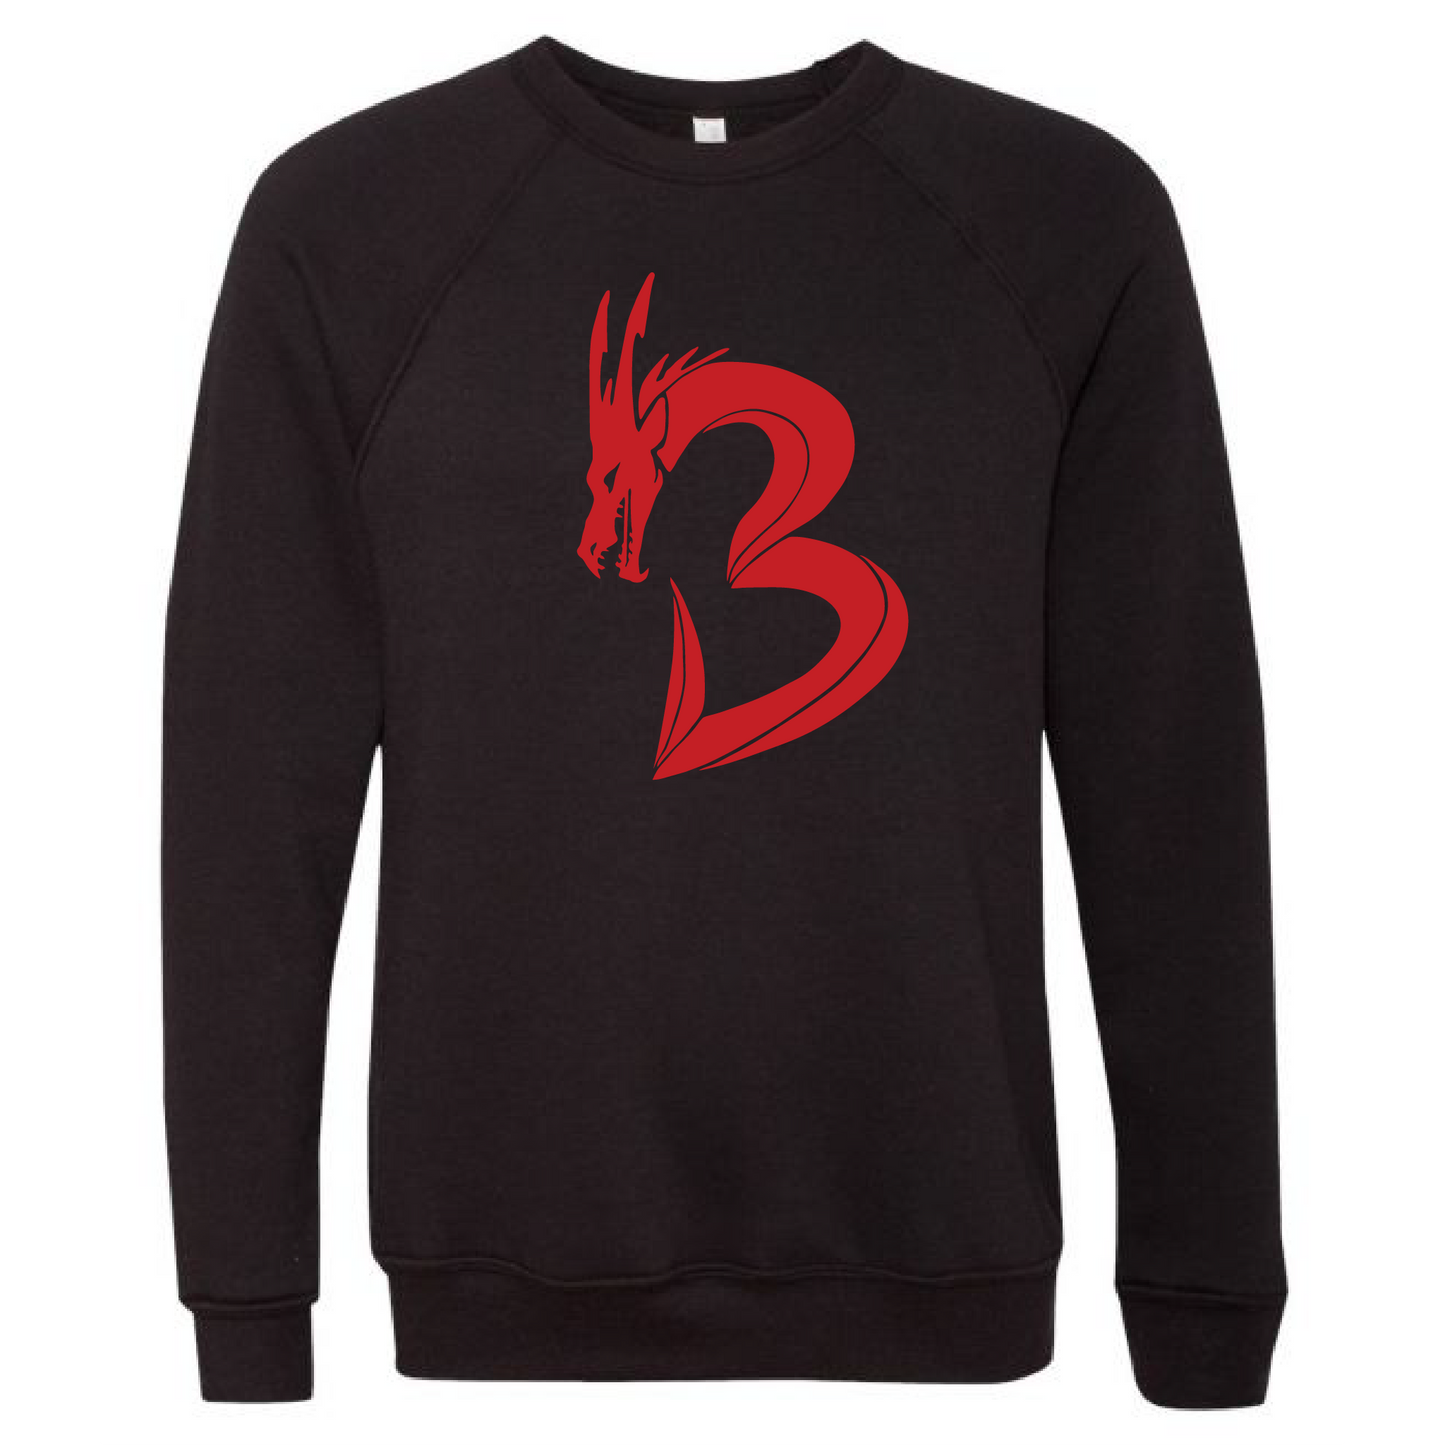 Unisex Sweatshirt - NP Bands "B" Dragon (red)